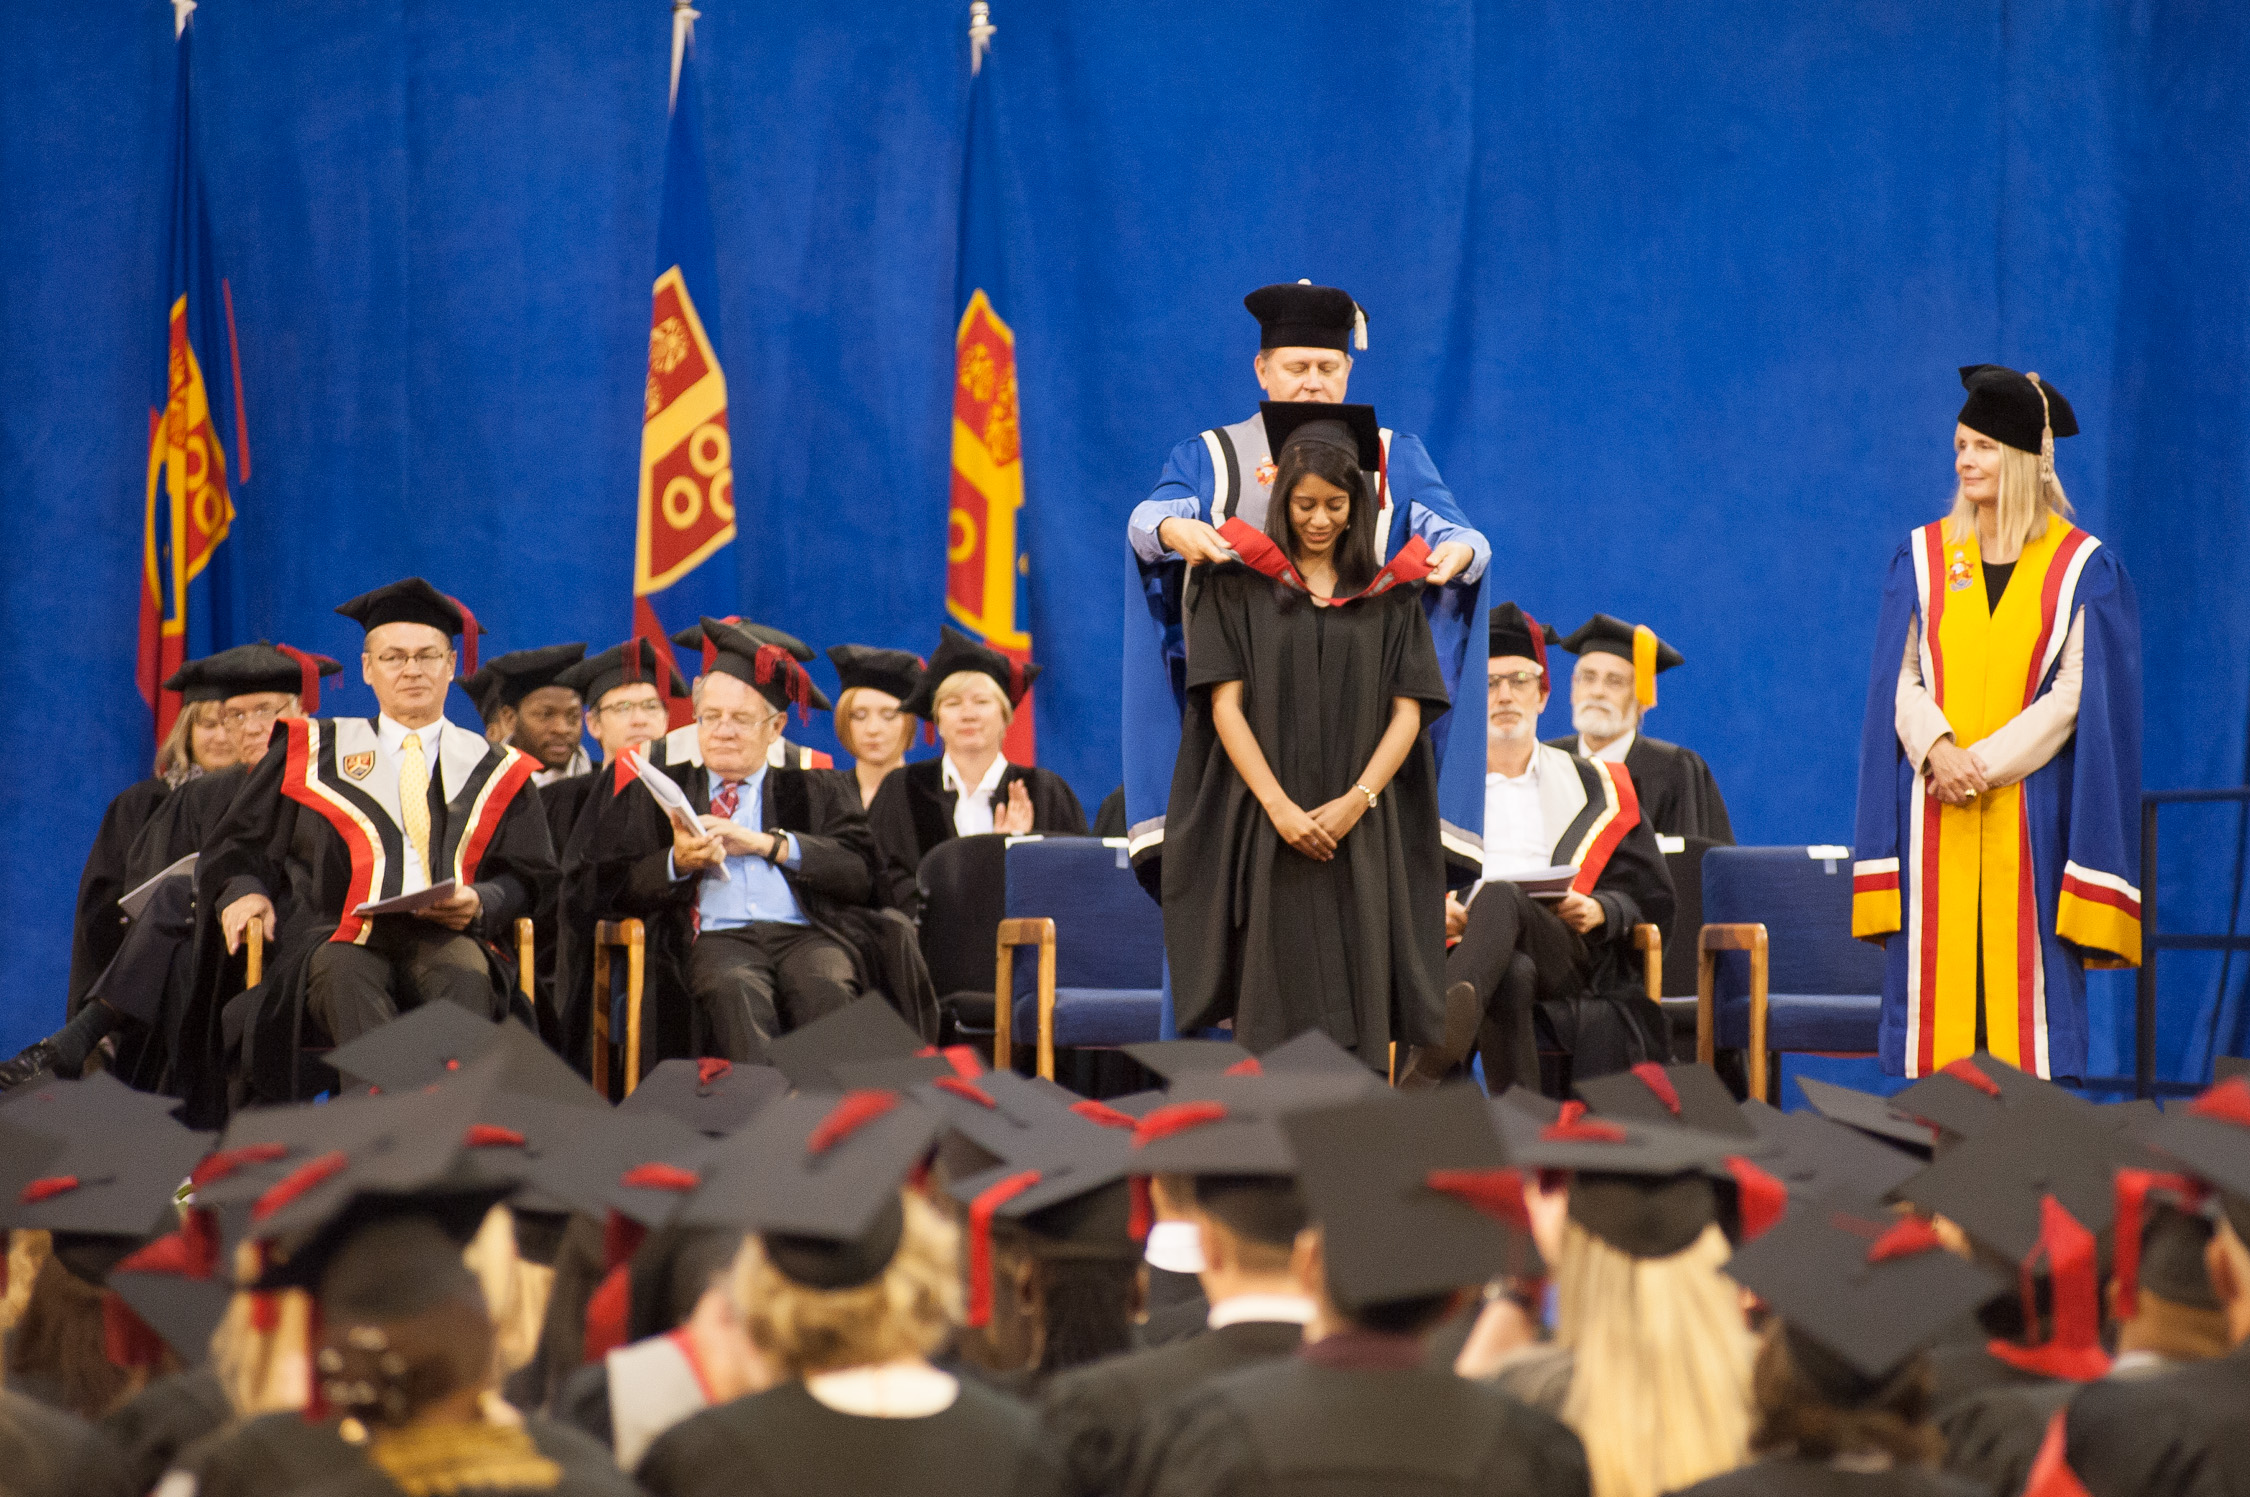 university of pretoria phd graduation gown